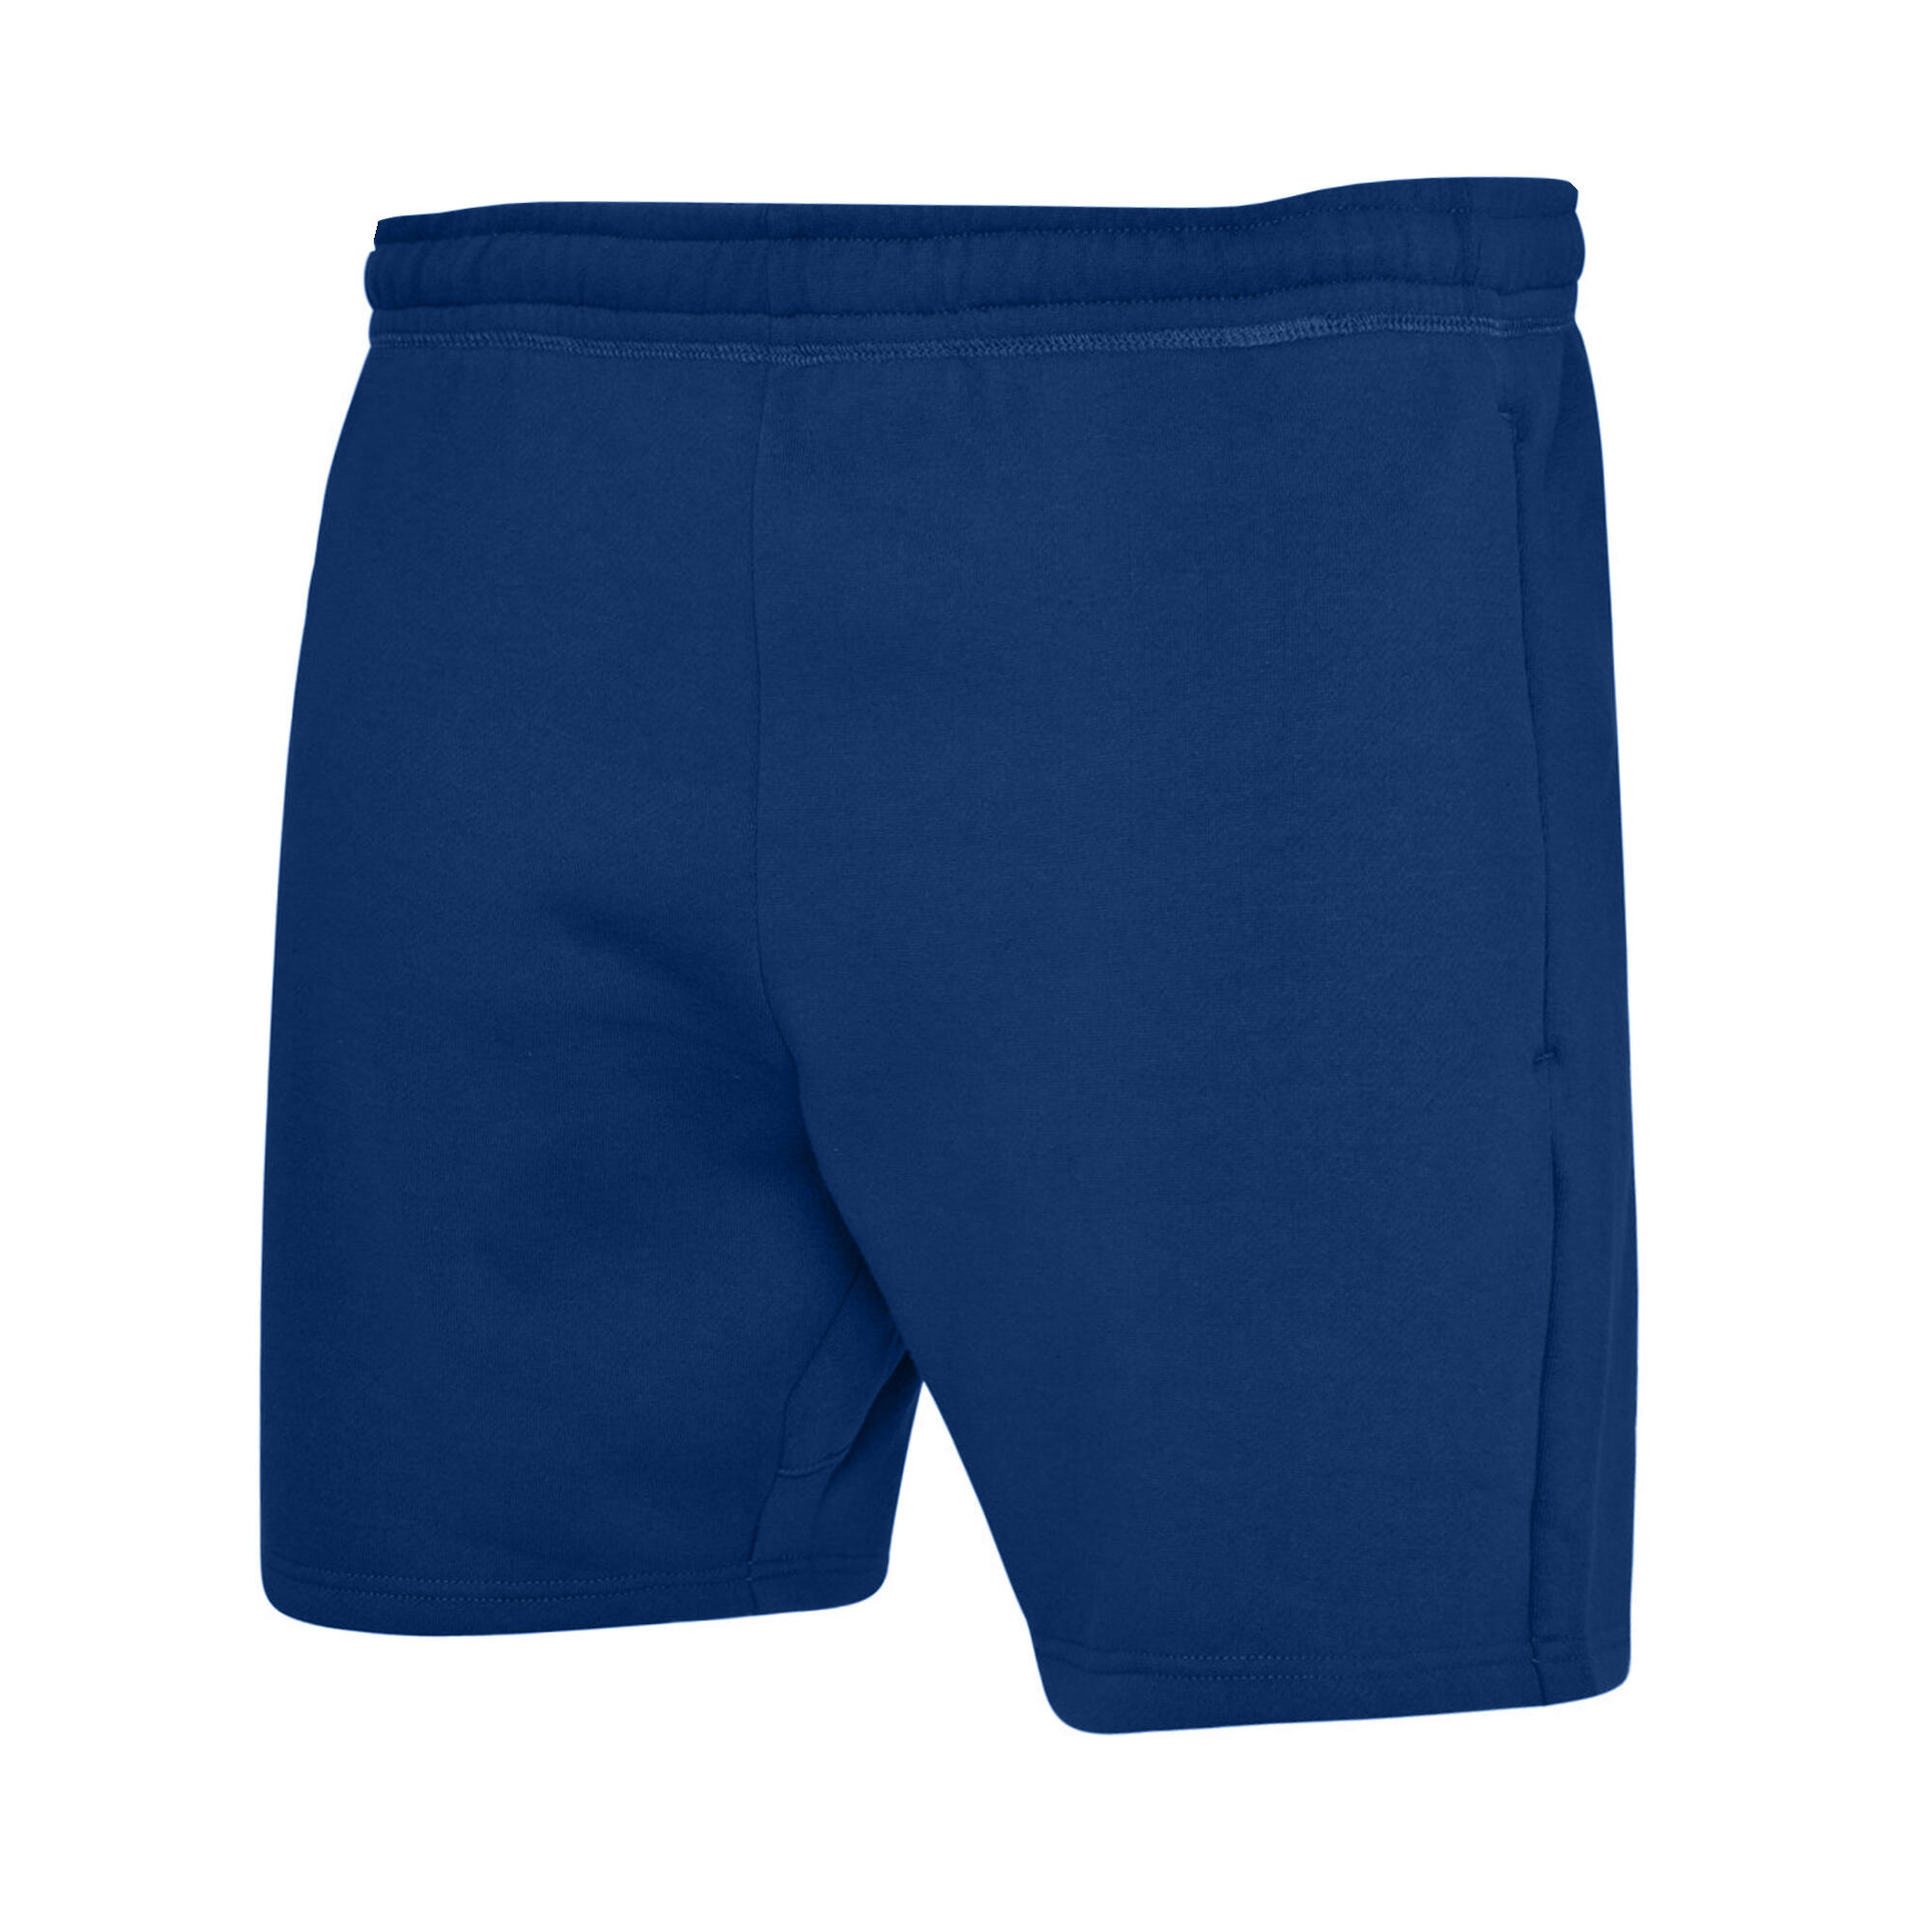 Mens Club Leisure Shorts (Navy Blue/White) 2/4